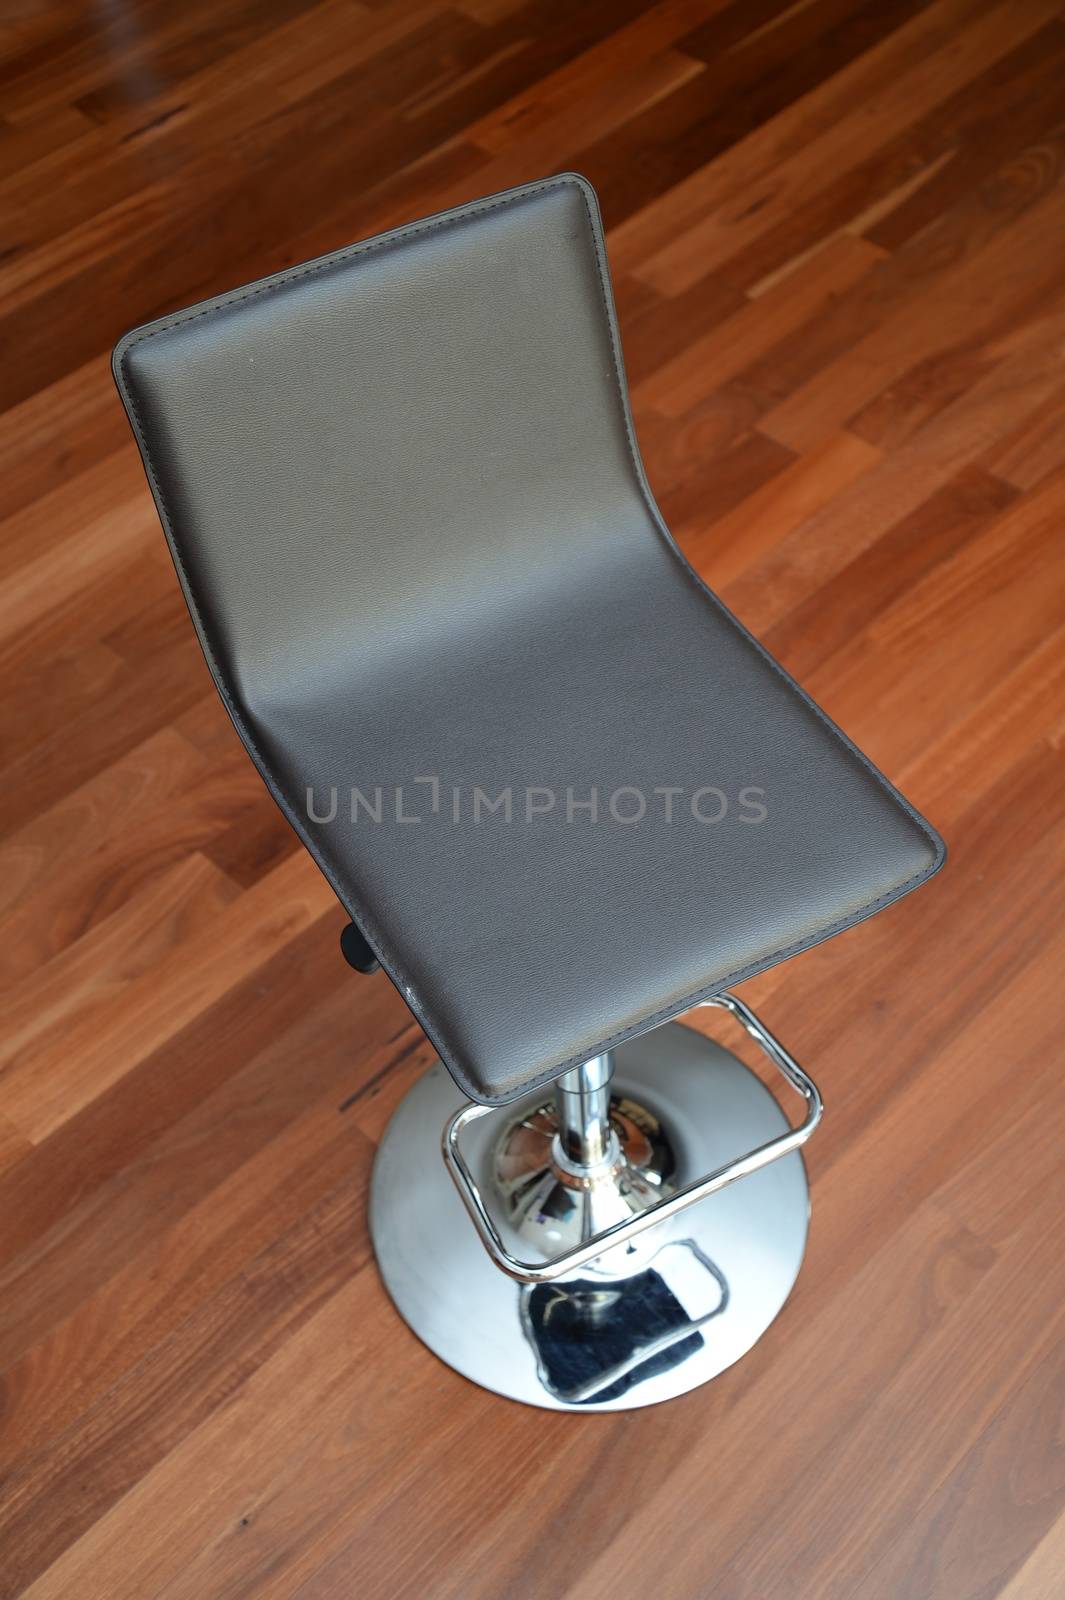 A bar stool isolated against a wooden floor